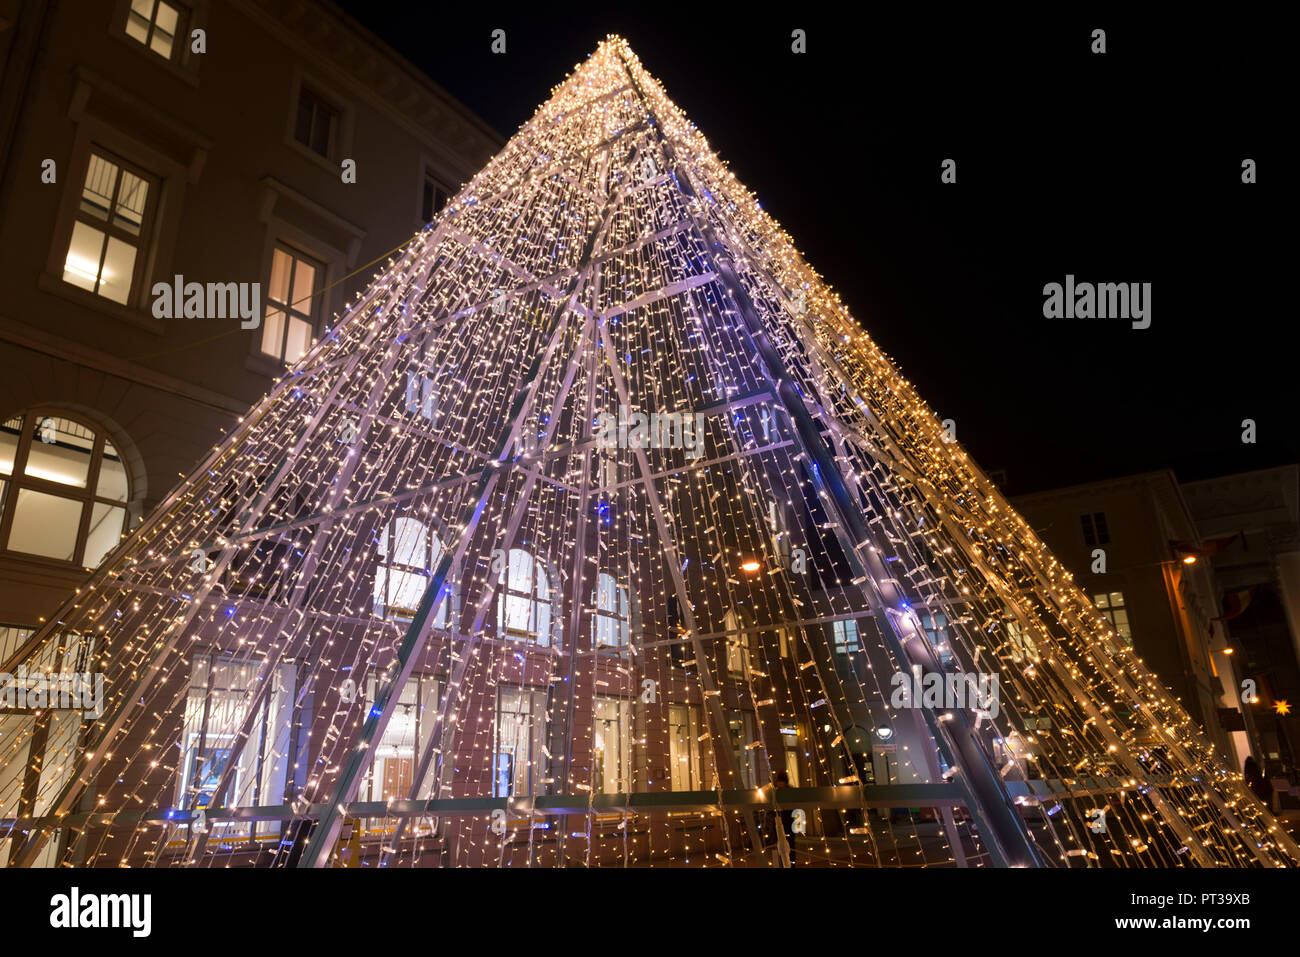 Germany, Baden-Württemberg, Karlsruhe, Christmas pyramid on market square Stock Photo